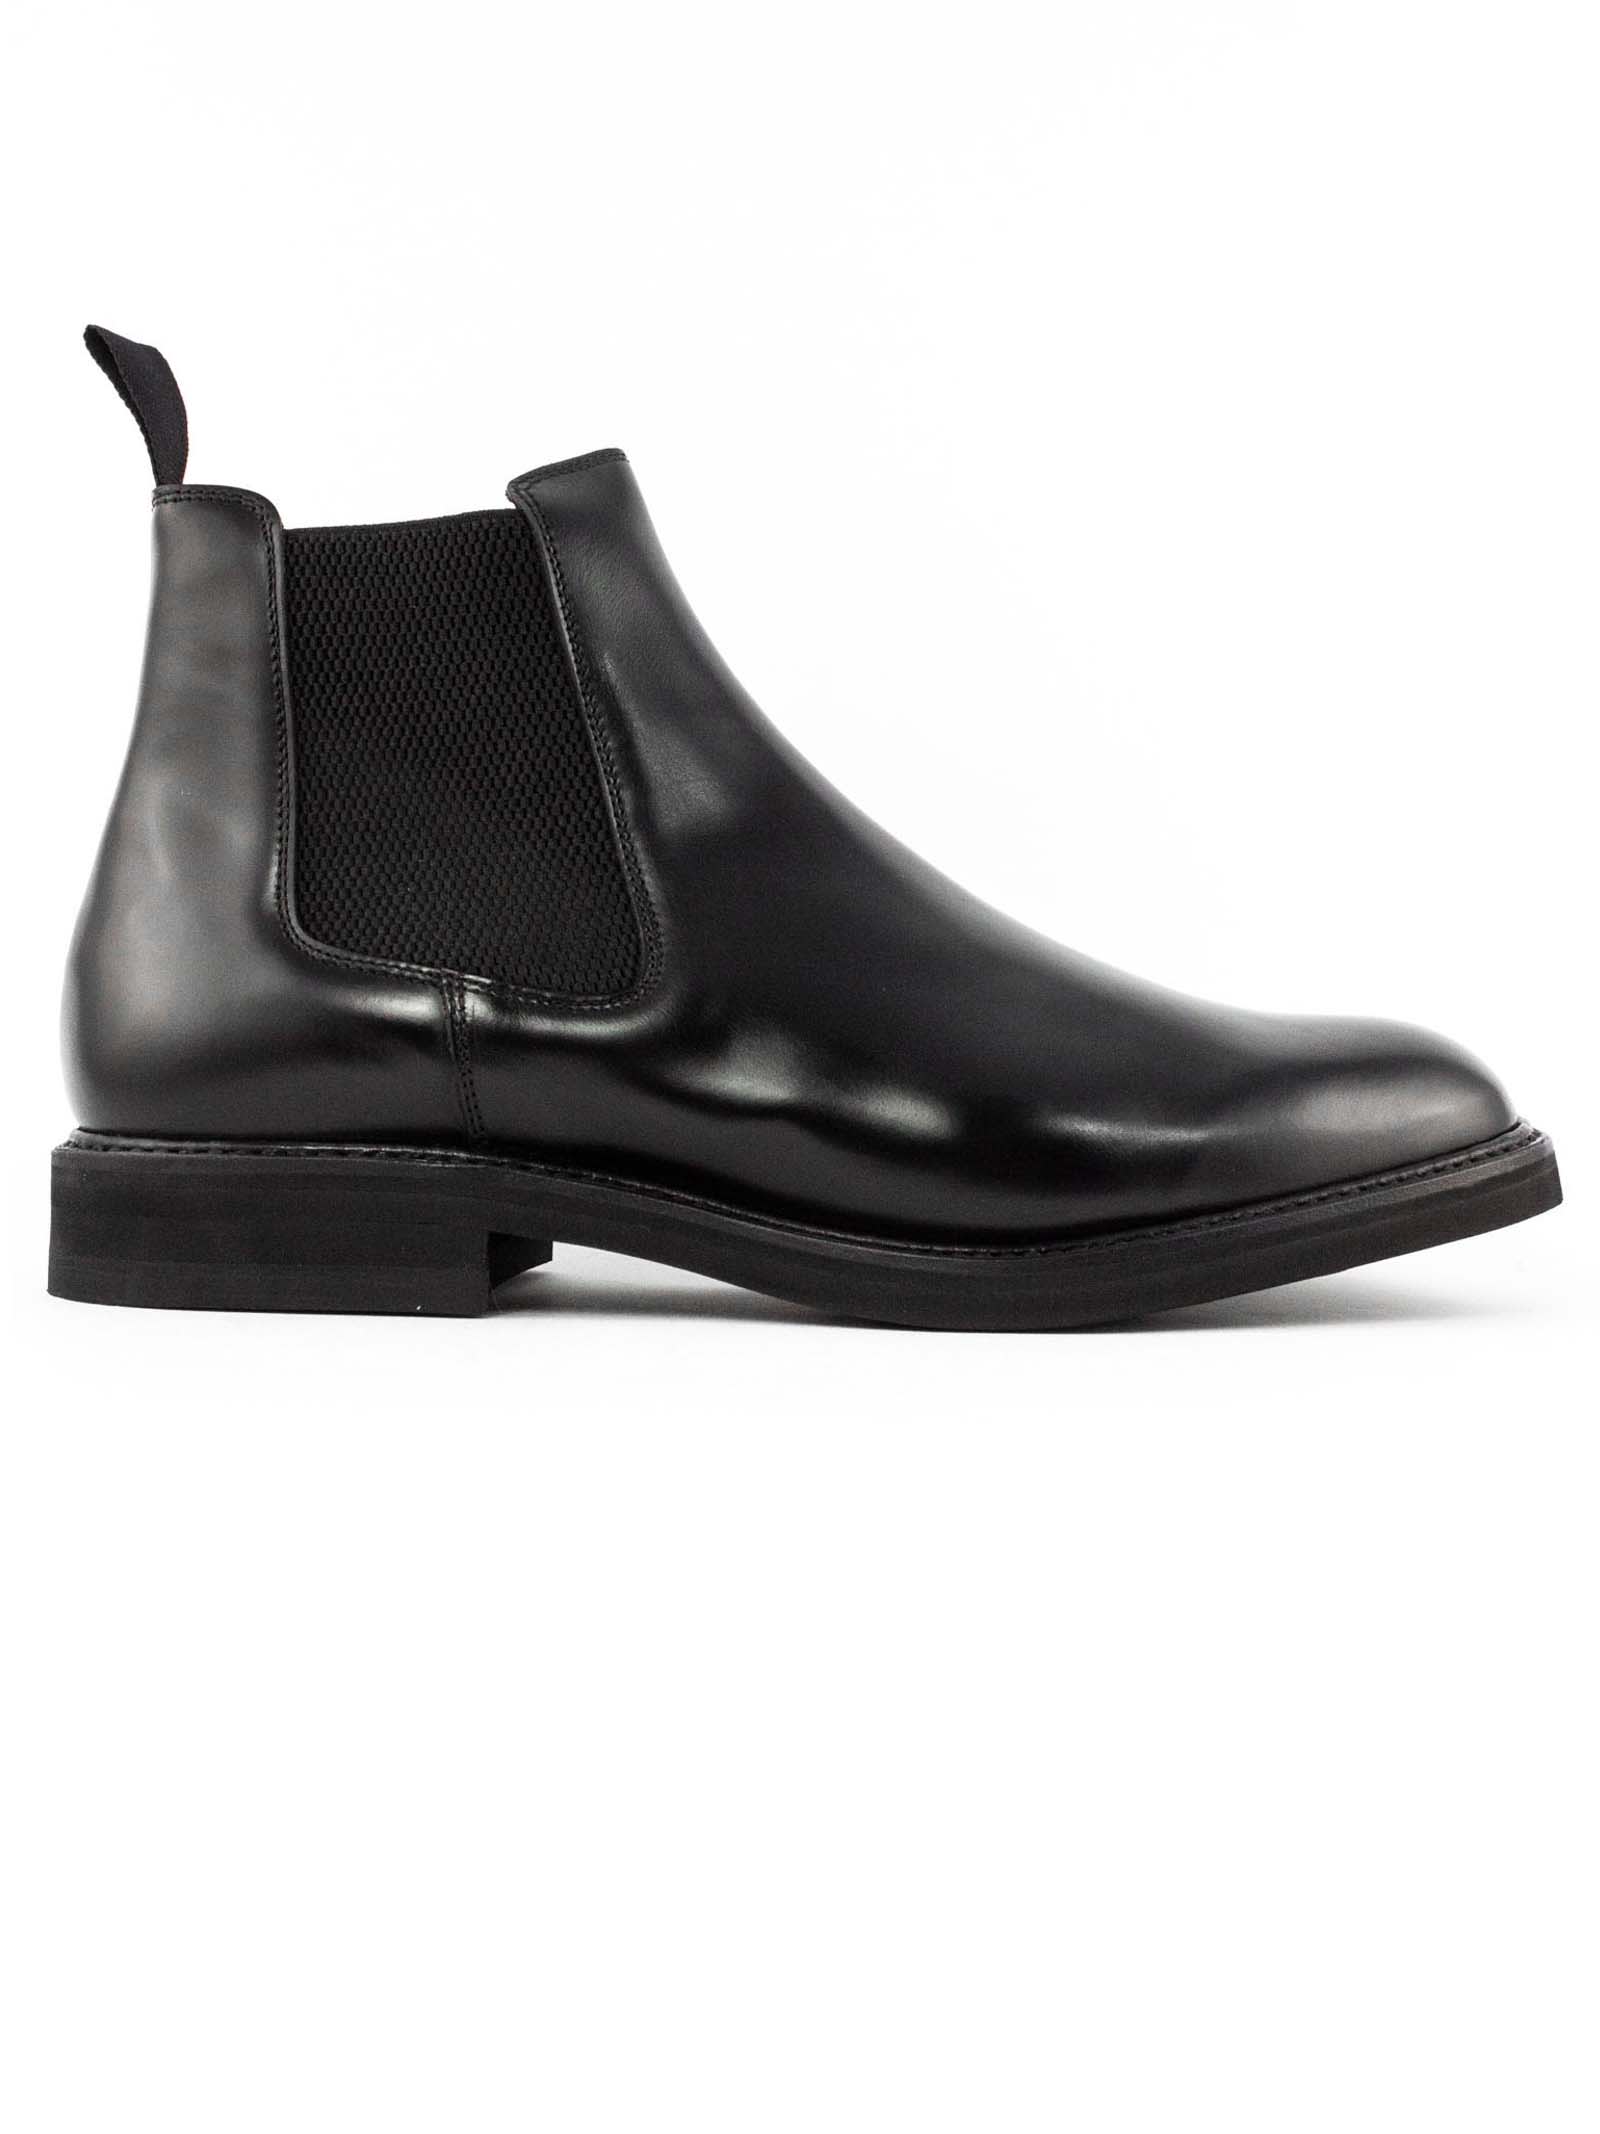 Berwick 1707 Black Leather Ankle Boot